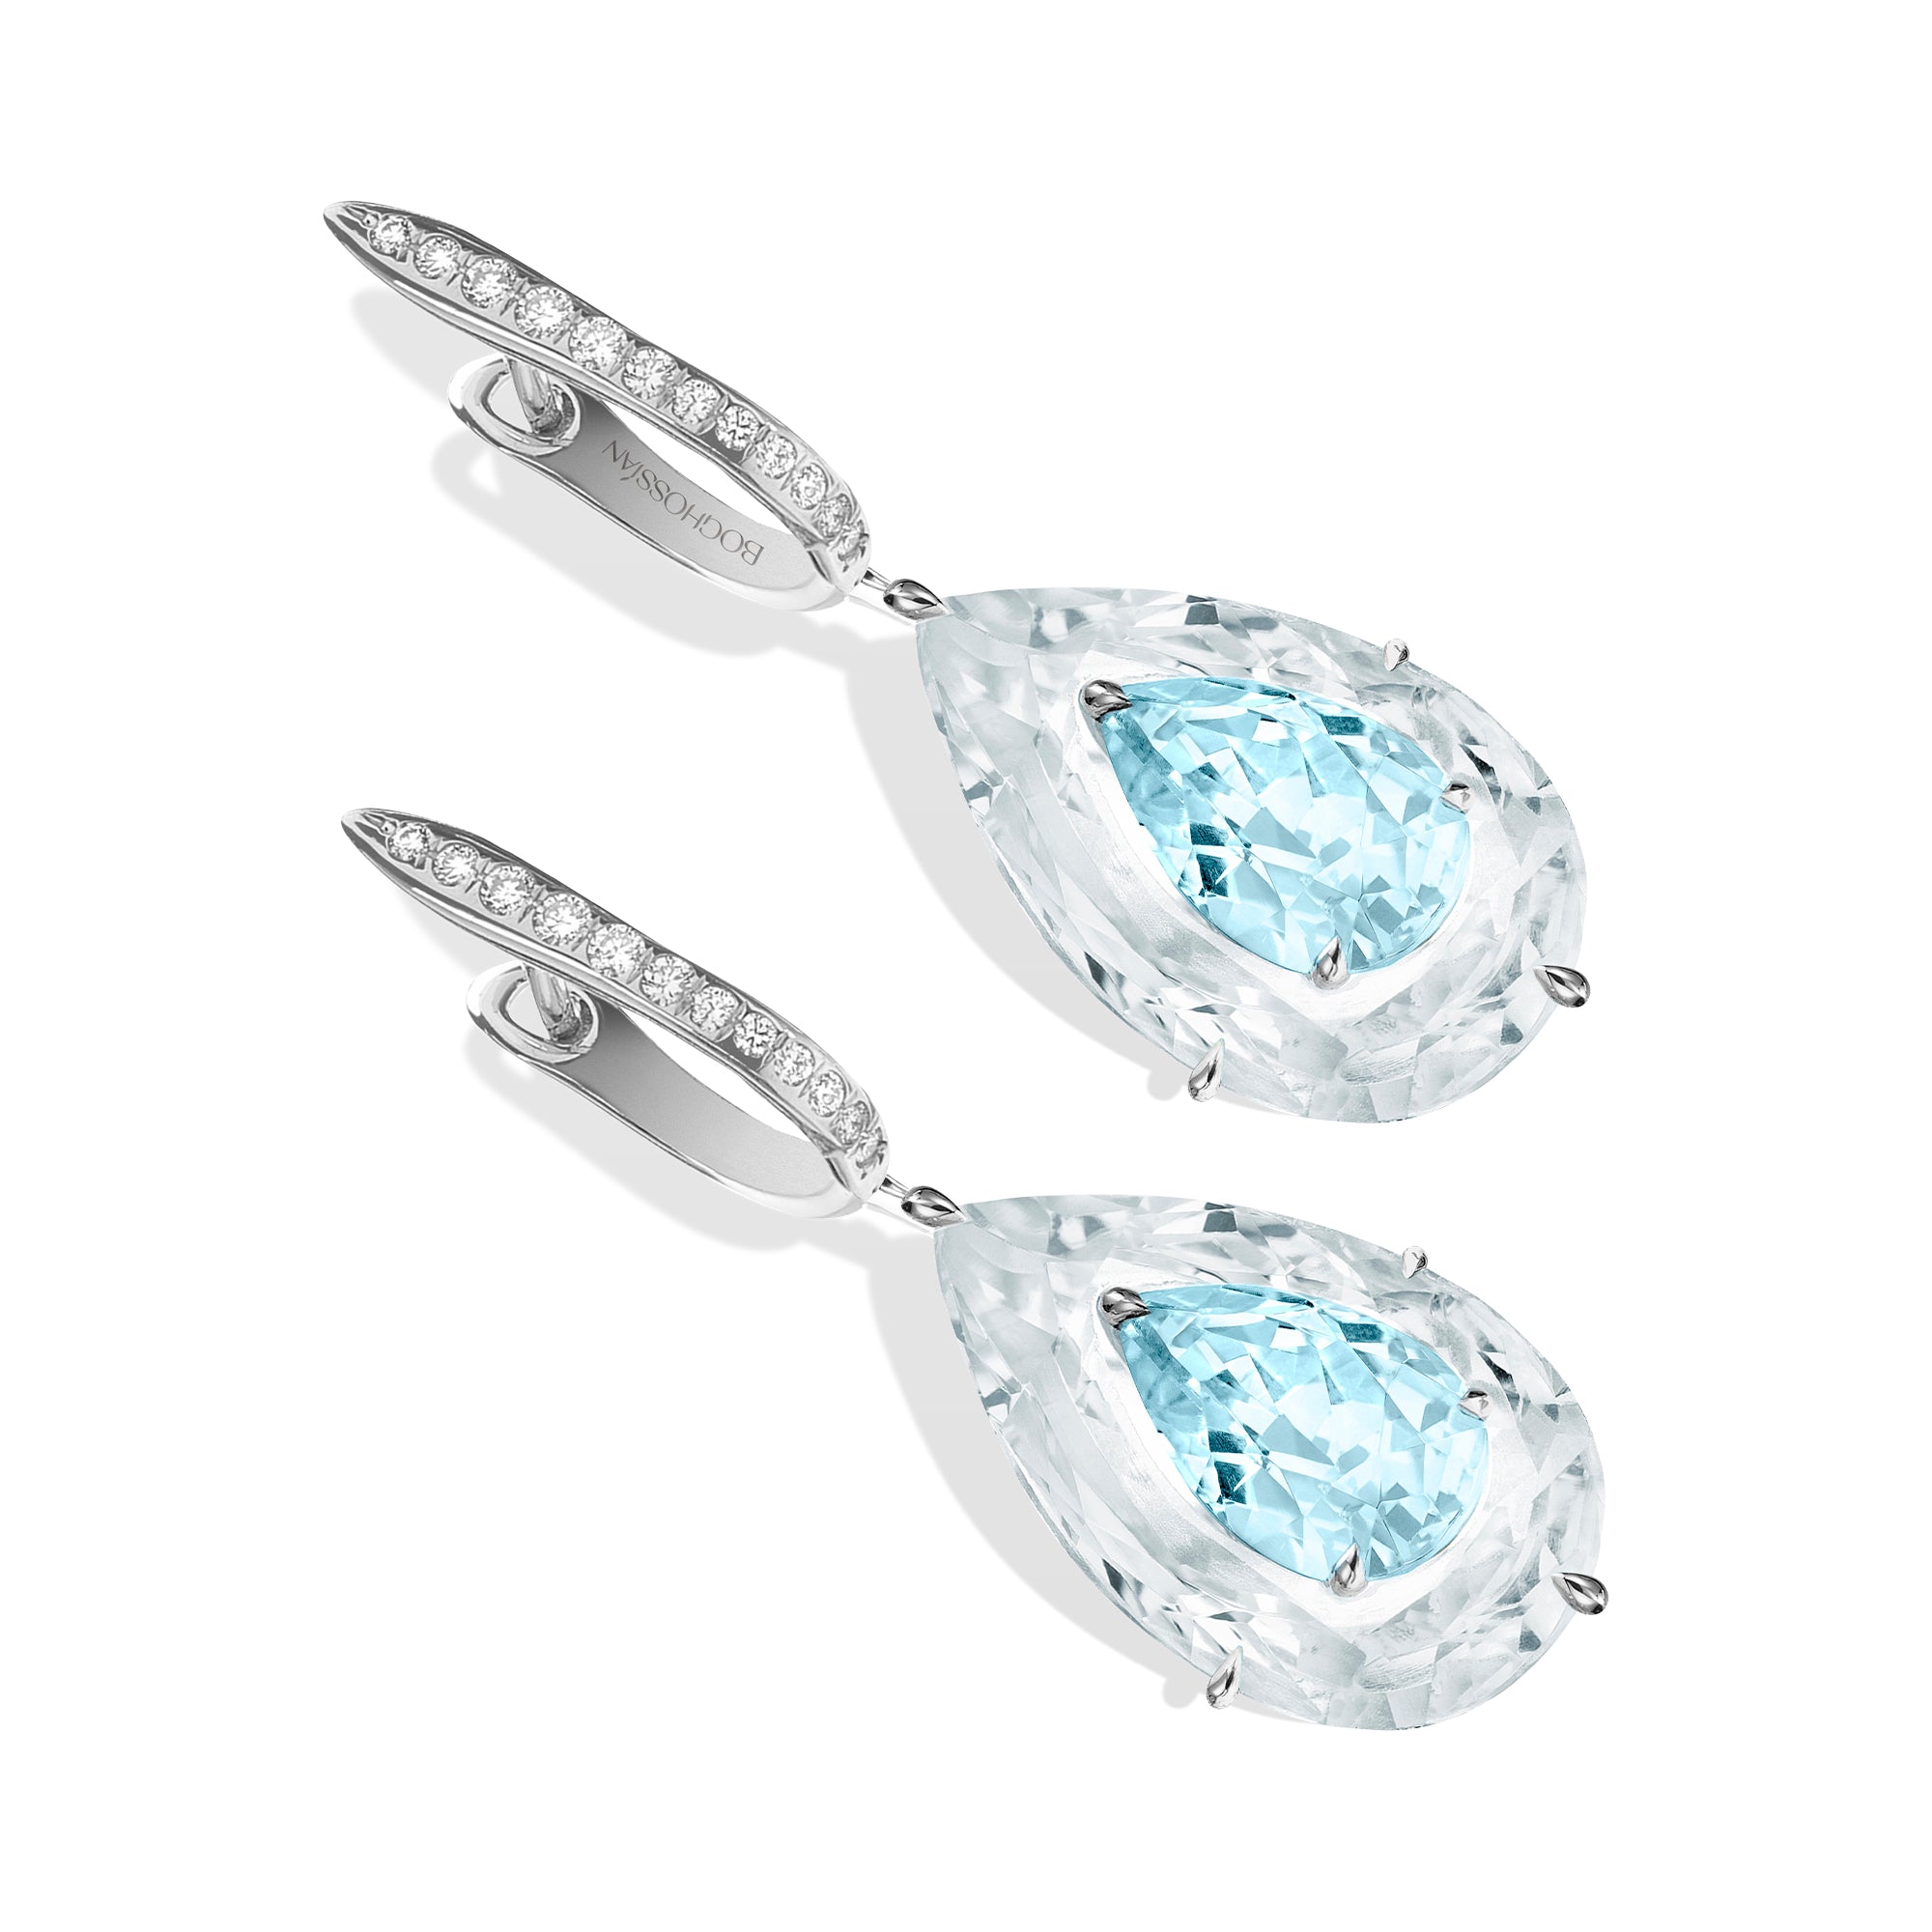 Shine - Aquamarine and Rock Crystal Earrings